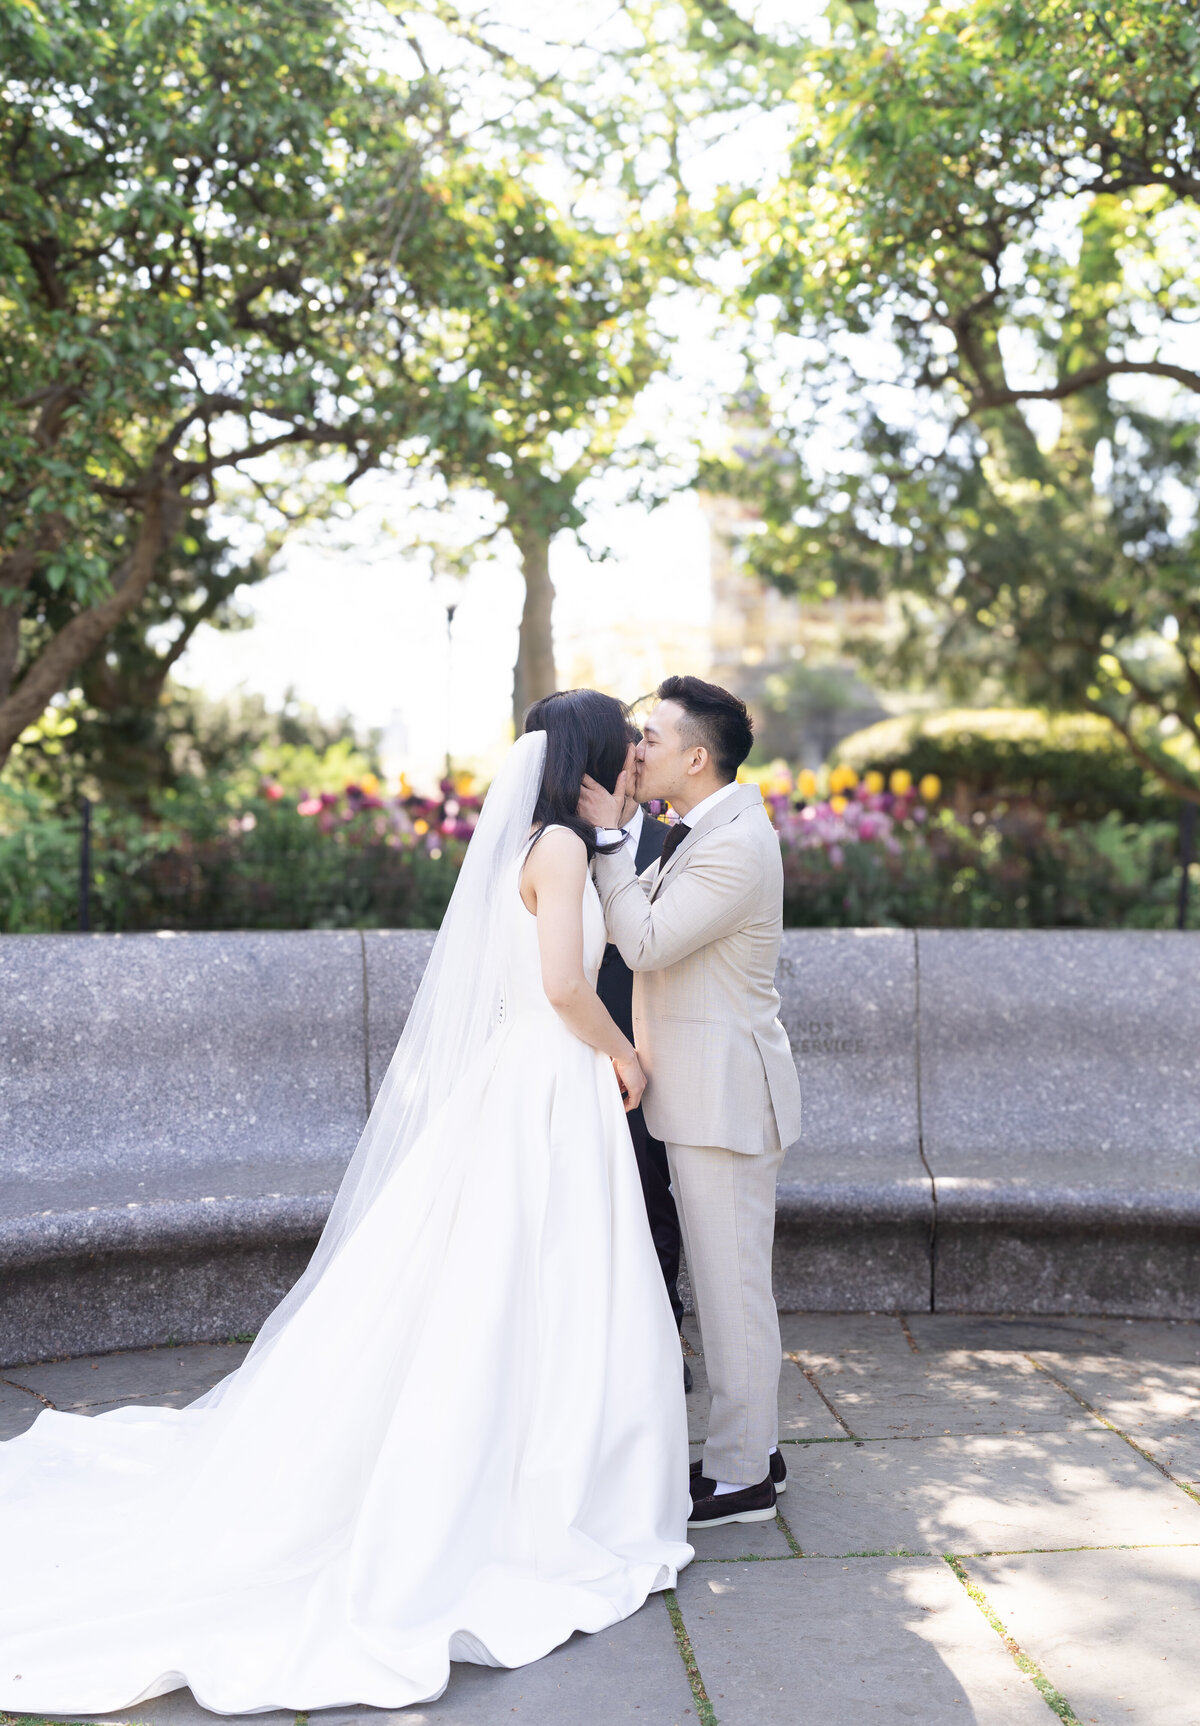 Amanda Gomez Photography - Central Park Wedding Photographer - 22